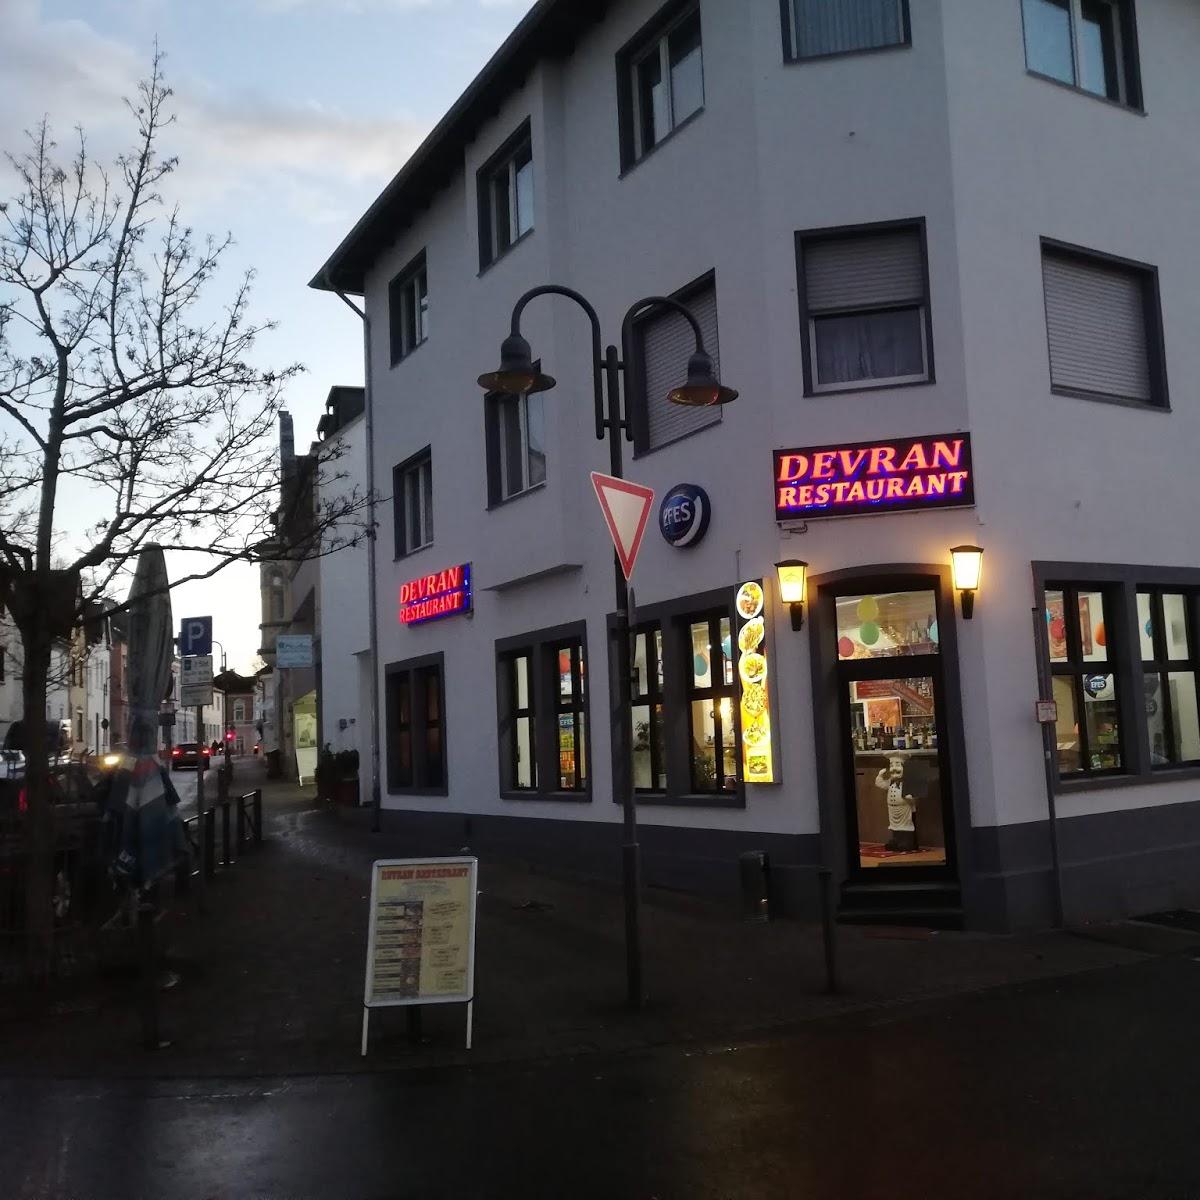 Restaurant "Devran" in Bad Honnef